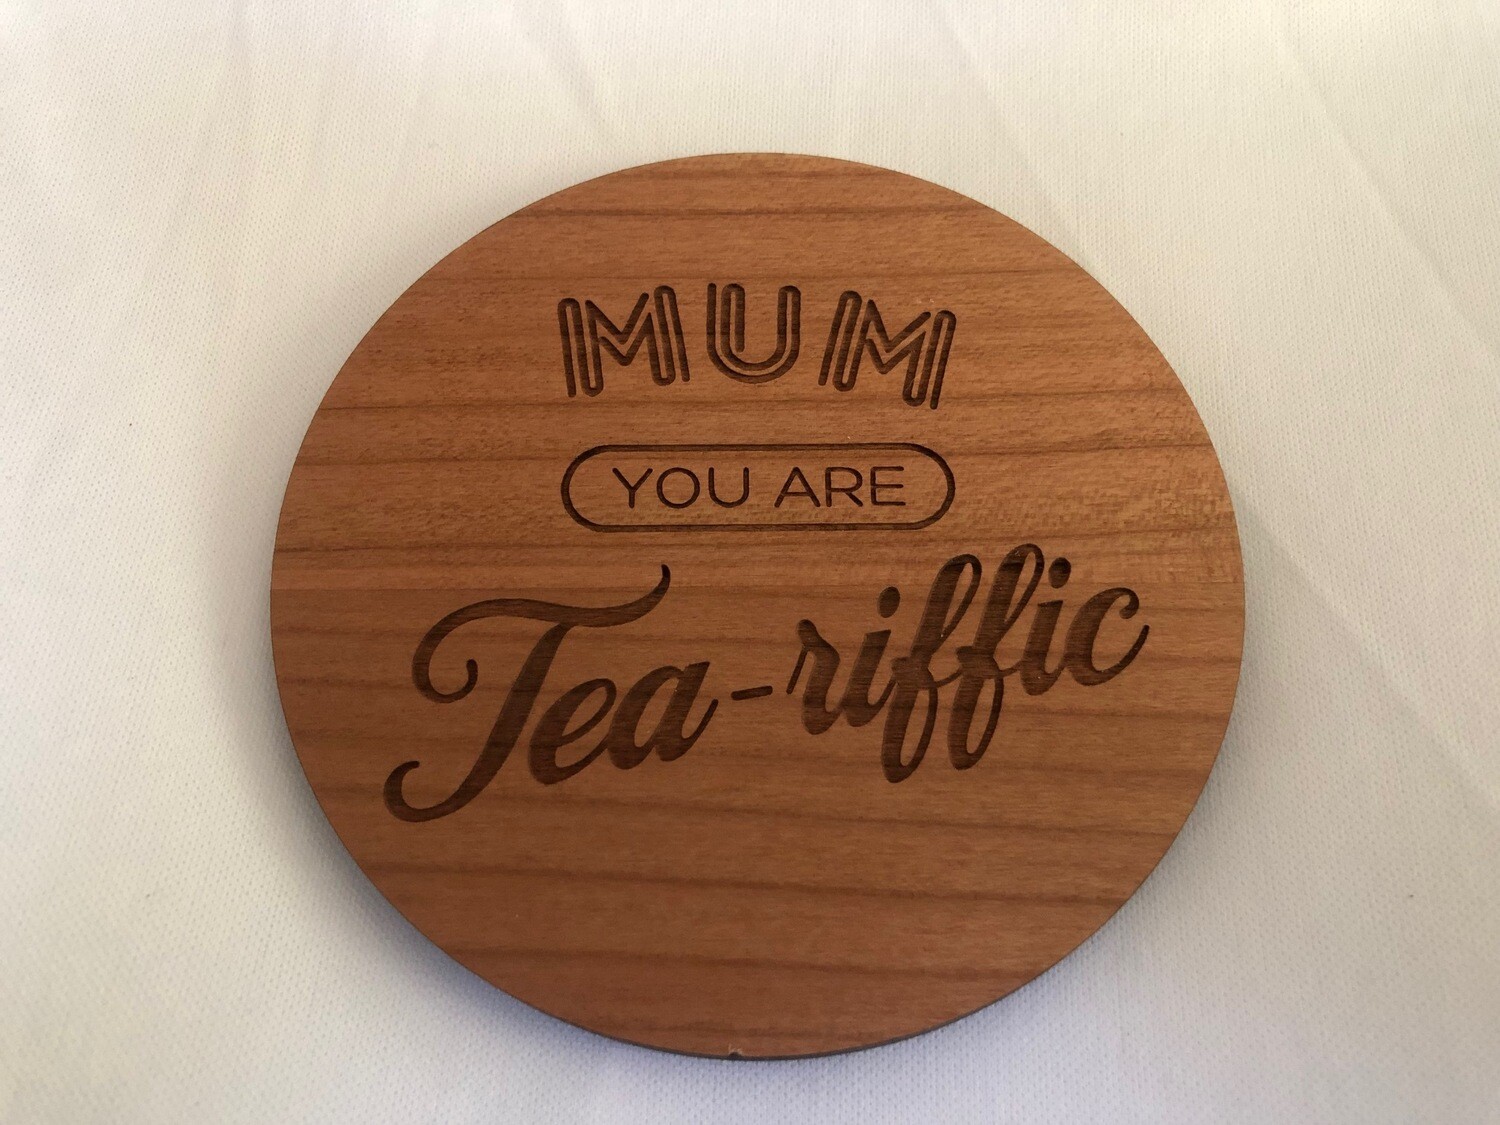 Tea-riffic Mum tea coaster